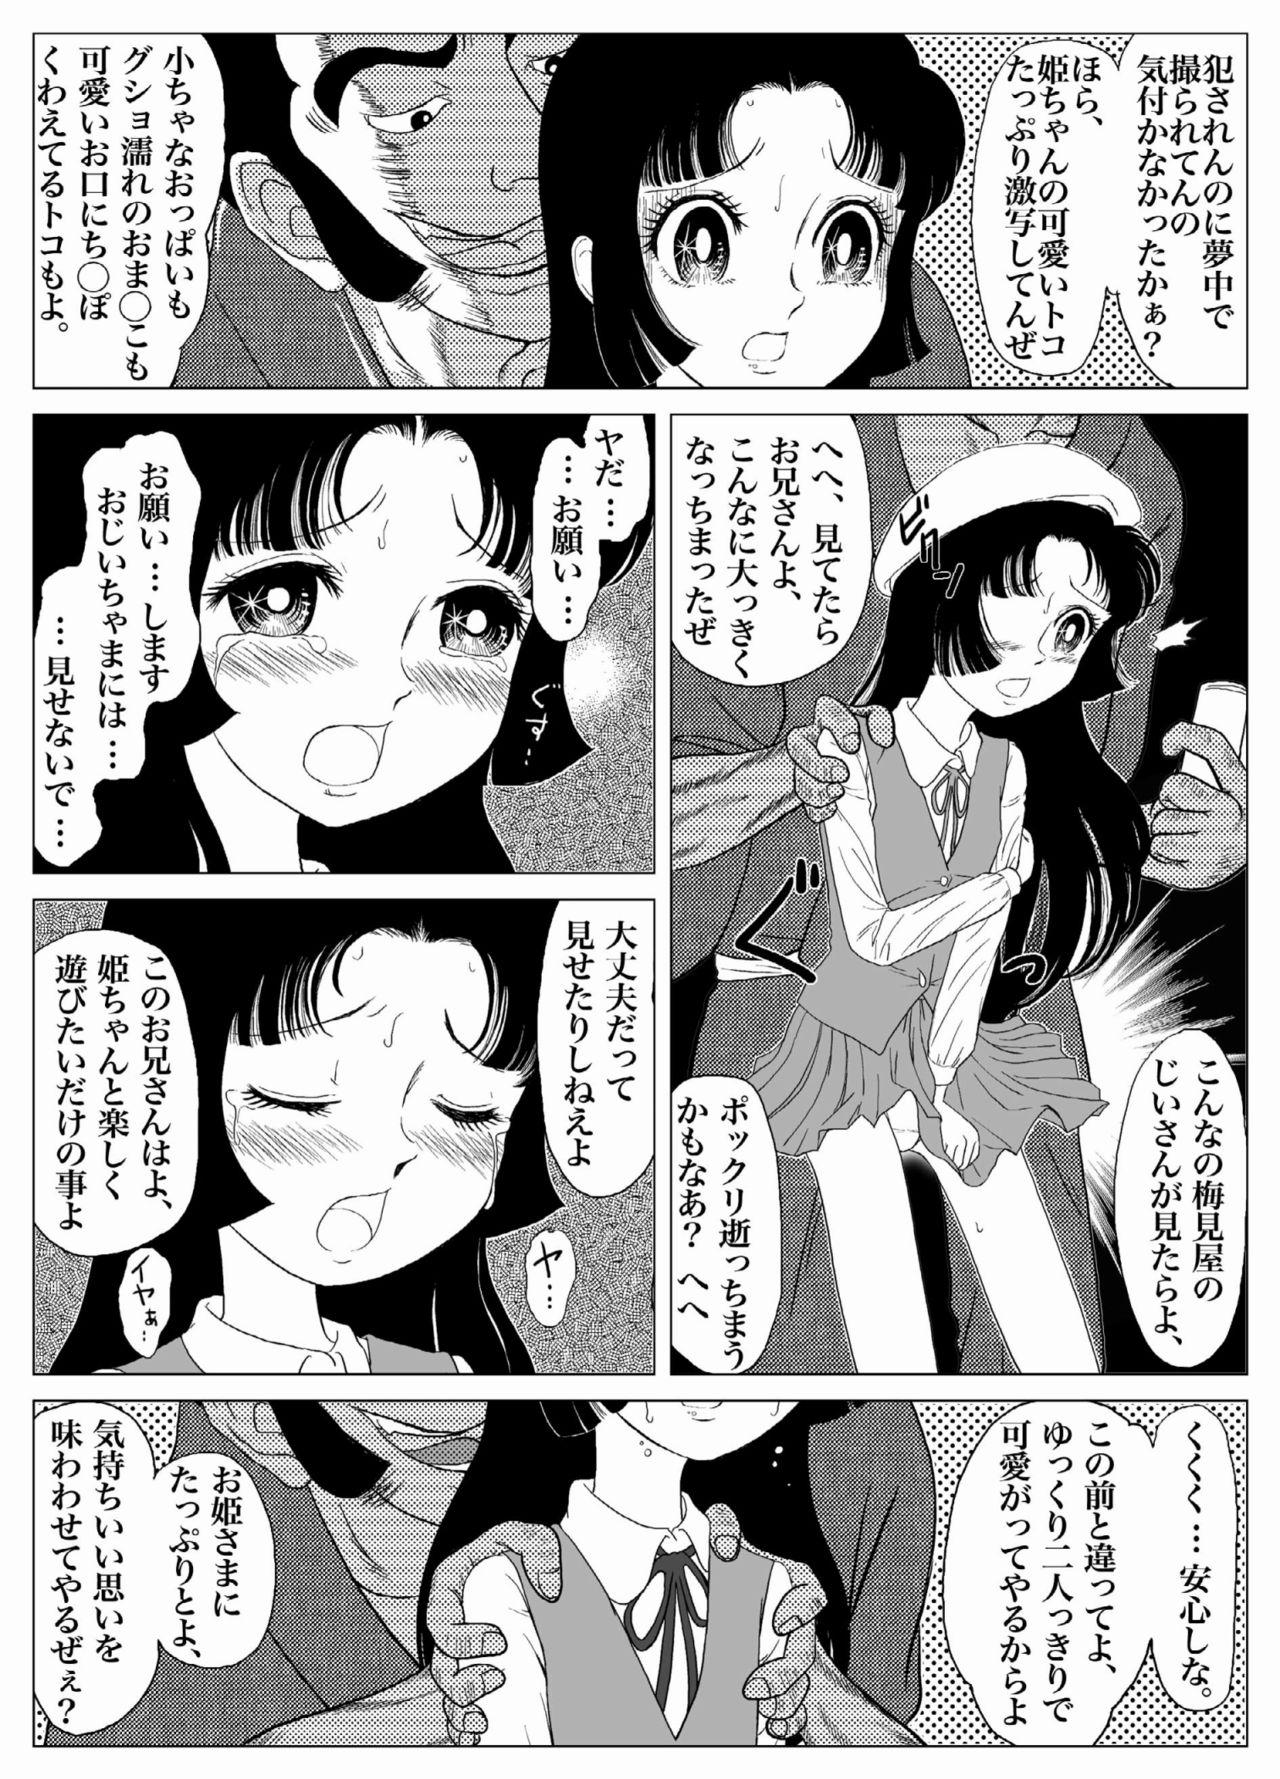 Women Uwasa no Goreijo - HIMEKO Still in the WRONG World Ex Girlfriend - Page 4